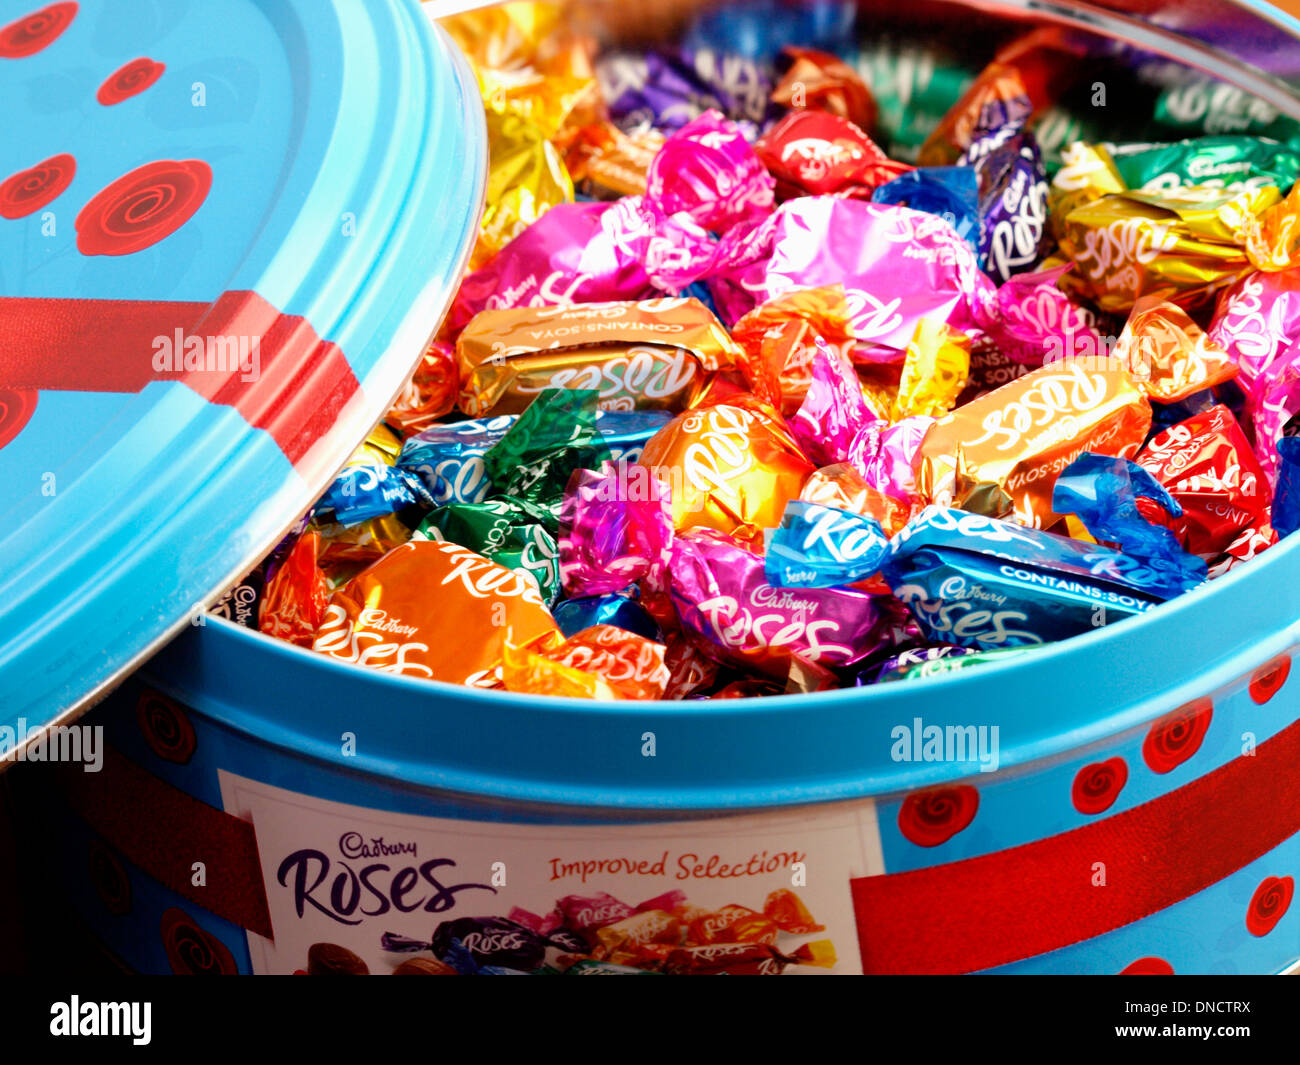 Cadbury roses chocolates hi-res stock photography and images - Alamy